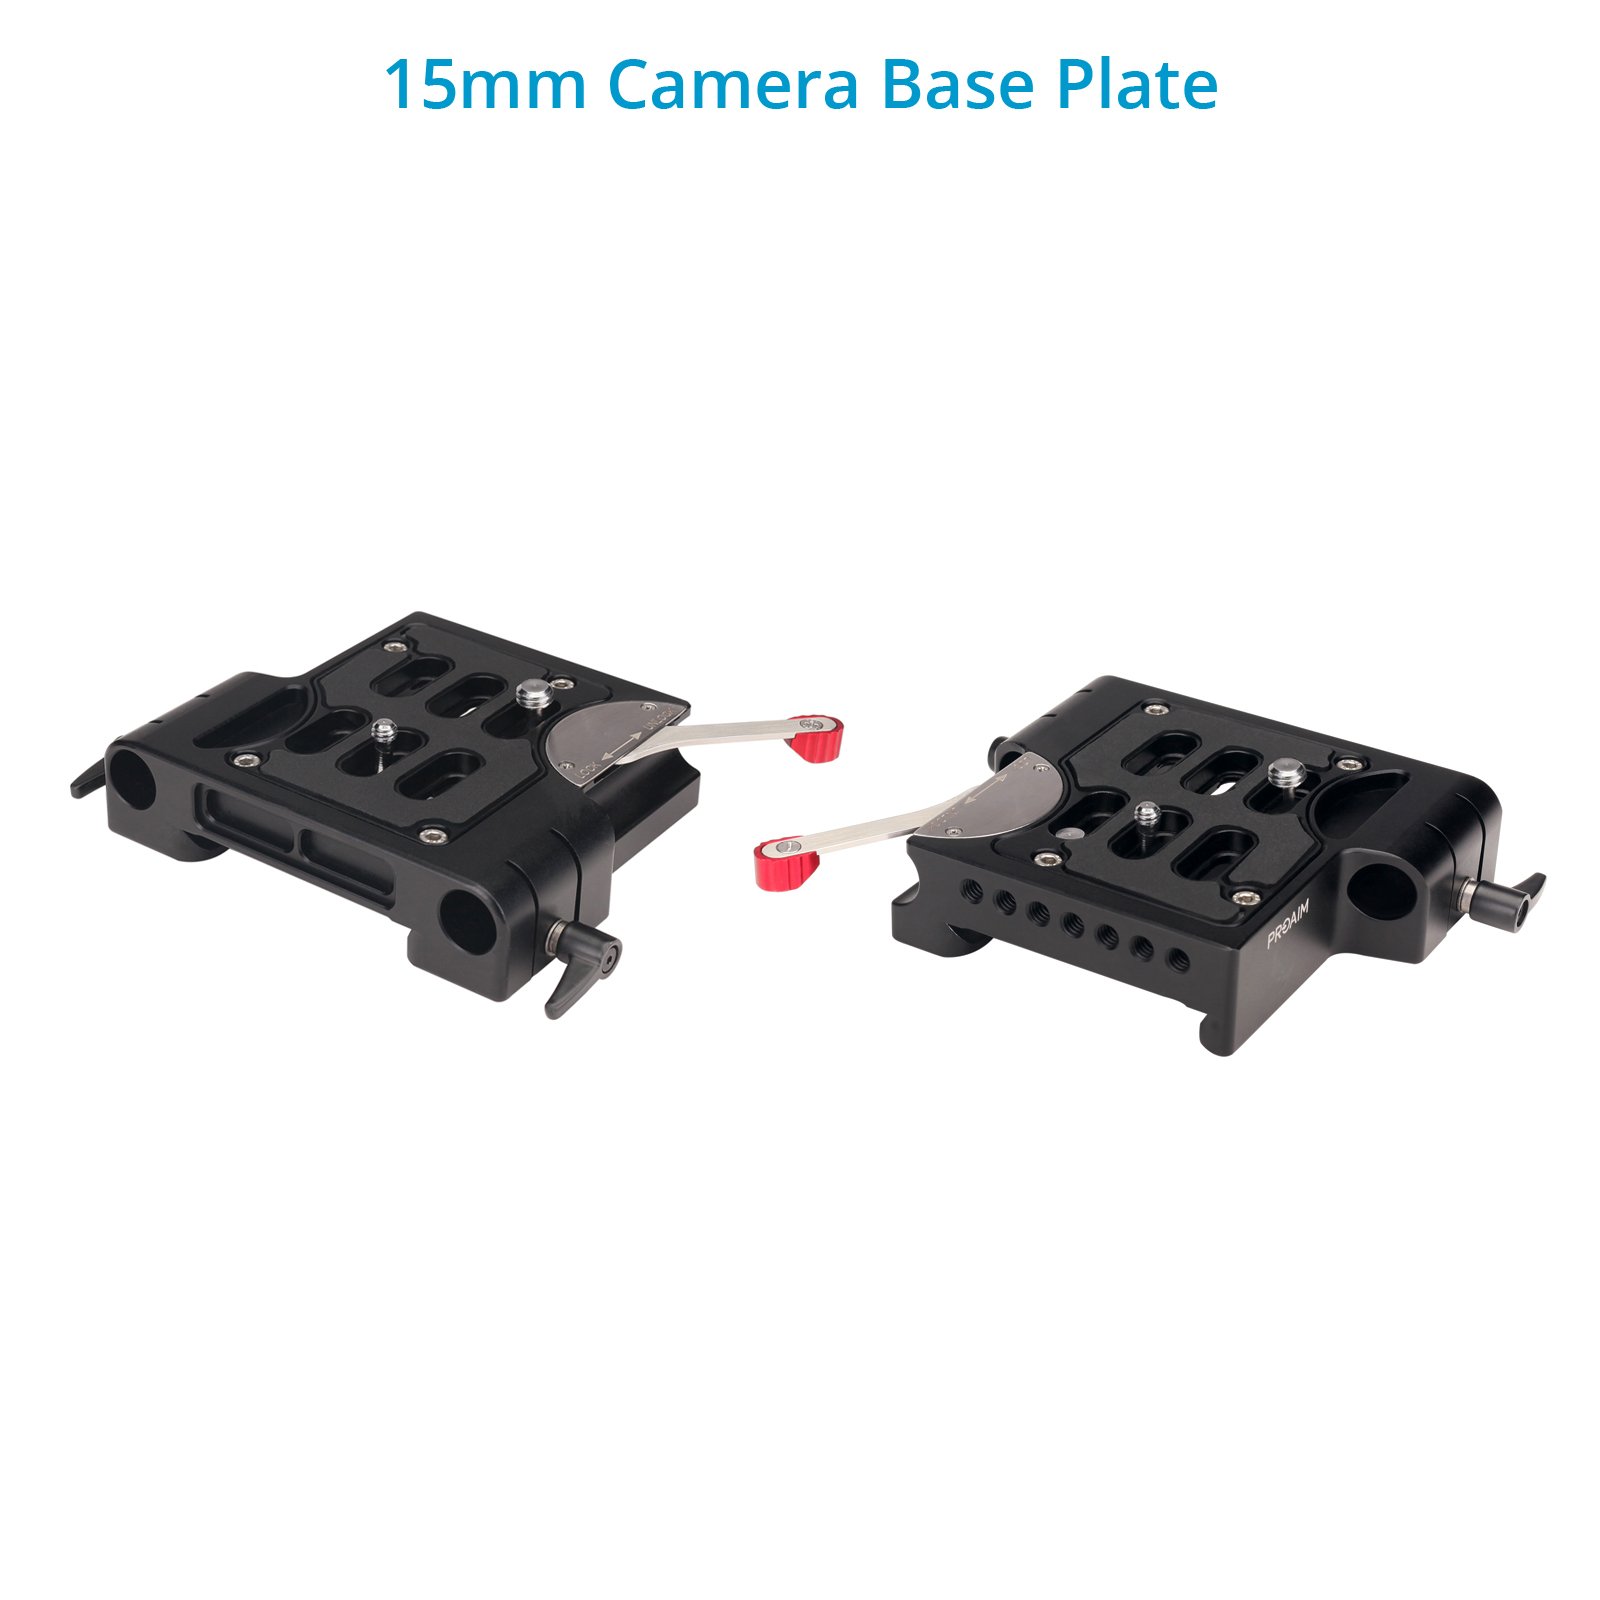 Proaim 15mm Quick Release Camera Base Plate with Dovetail (ARRI Standard) Baseplate มาตรฐาน Arri พร้อมช่องใส่ Rod 15 mm ราคา 8990 บาท